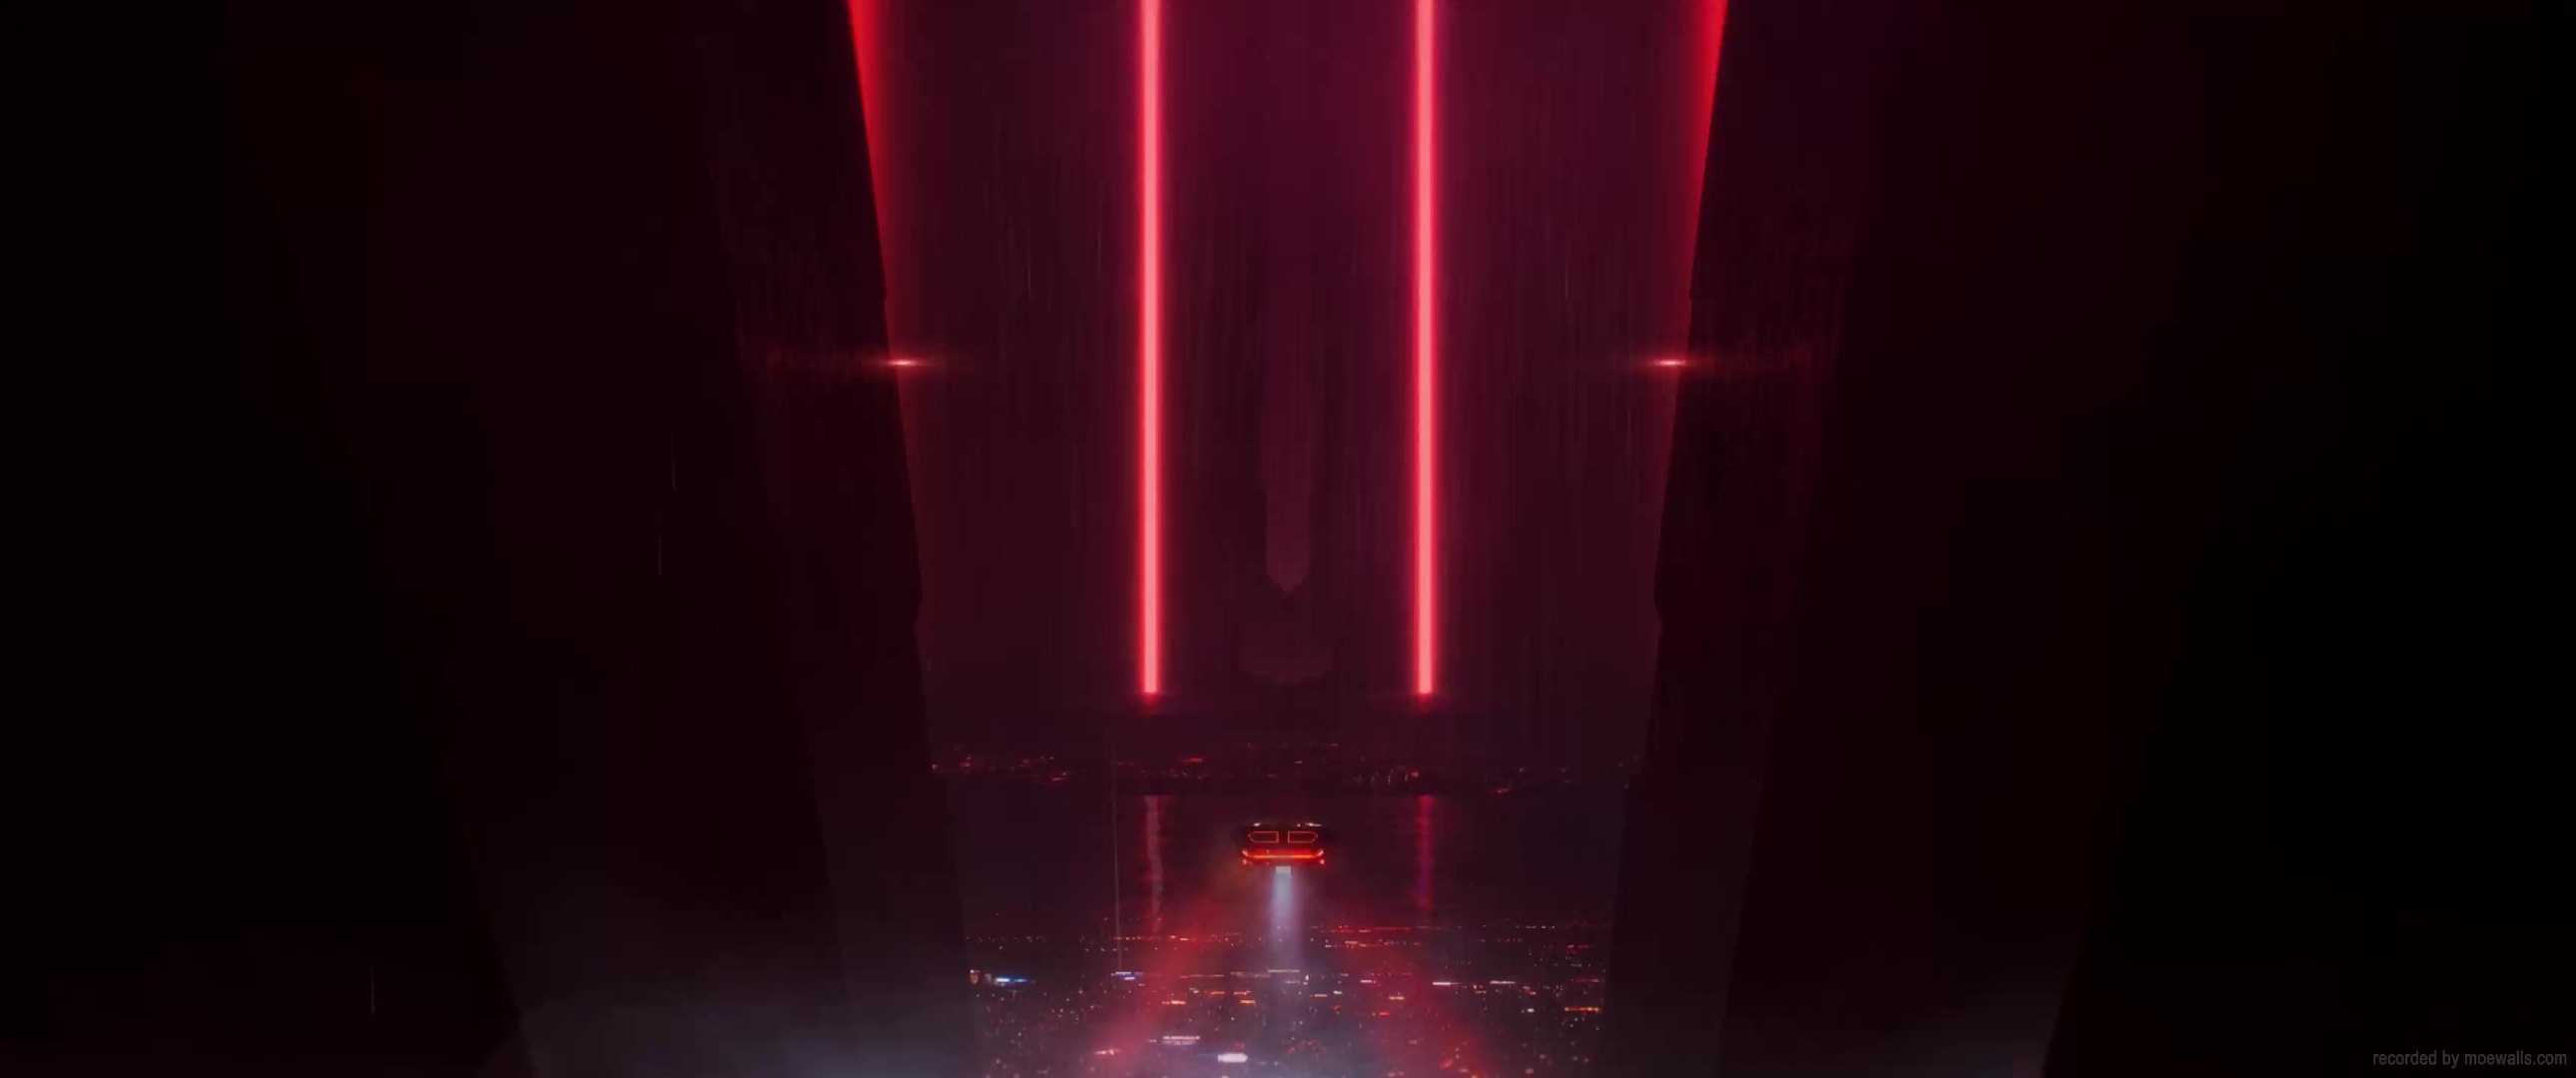 Neon Rainy Night Blade Runner 2049 Live Wallpaper - MoeWalls